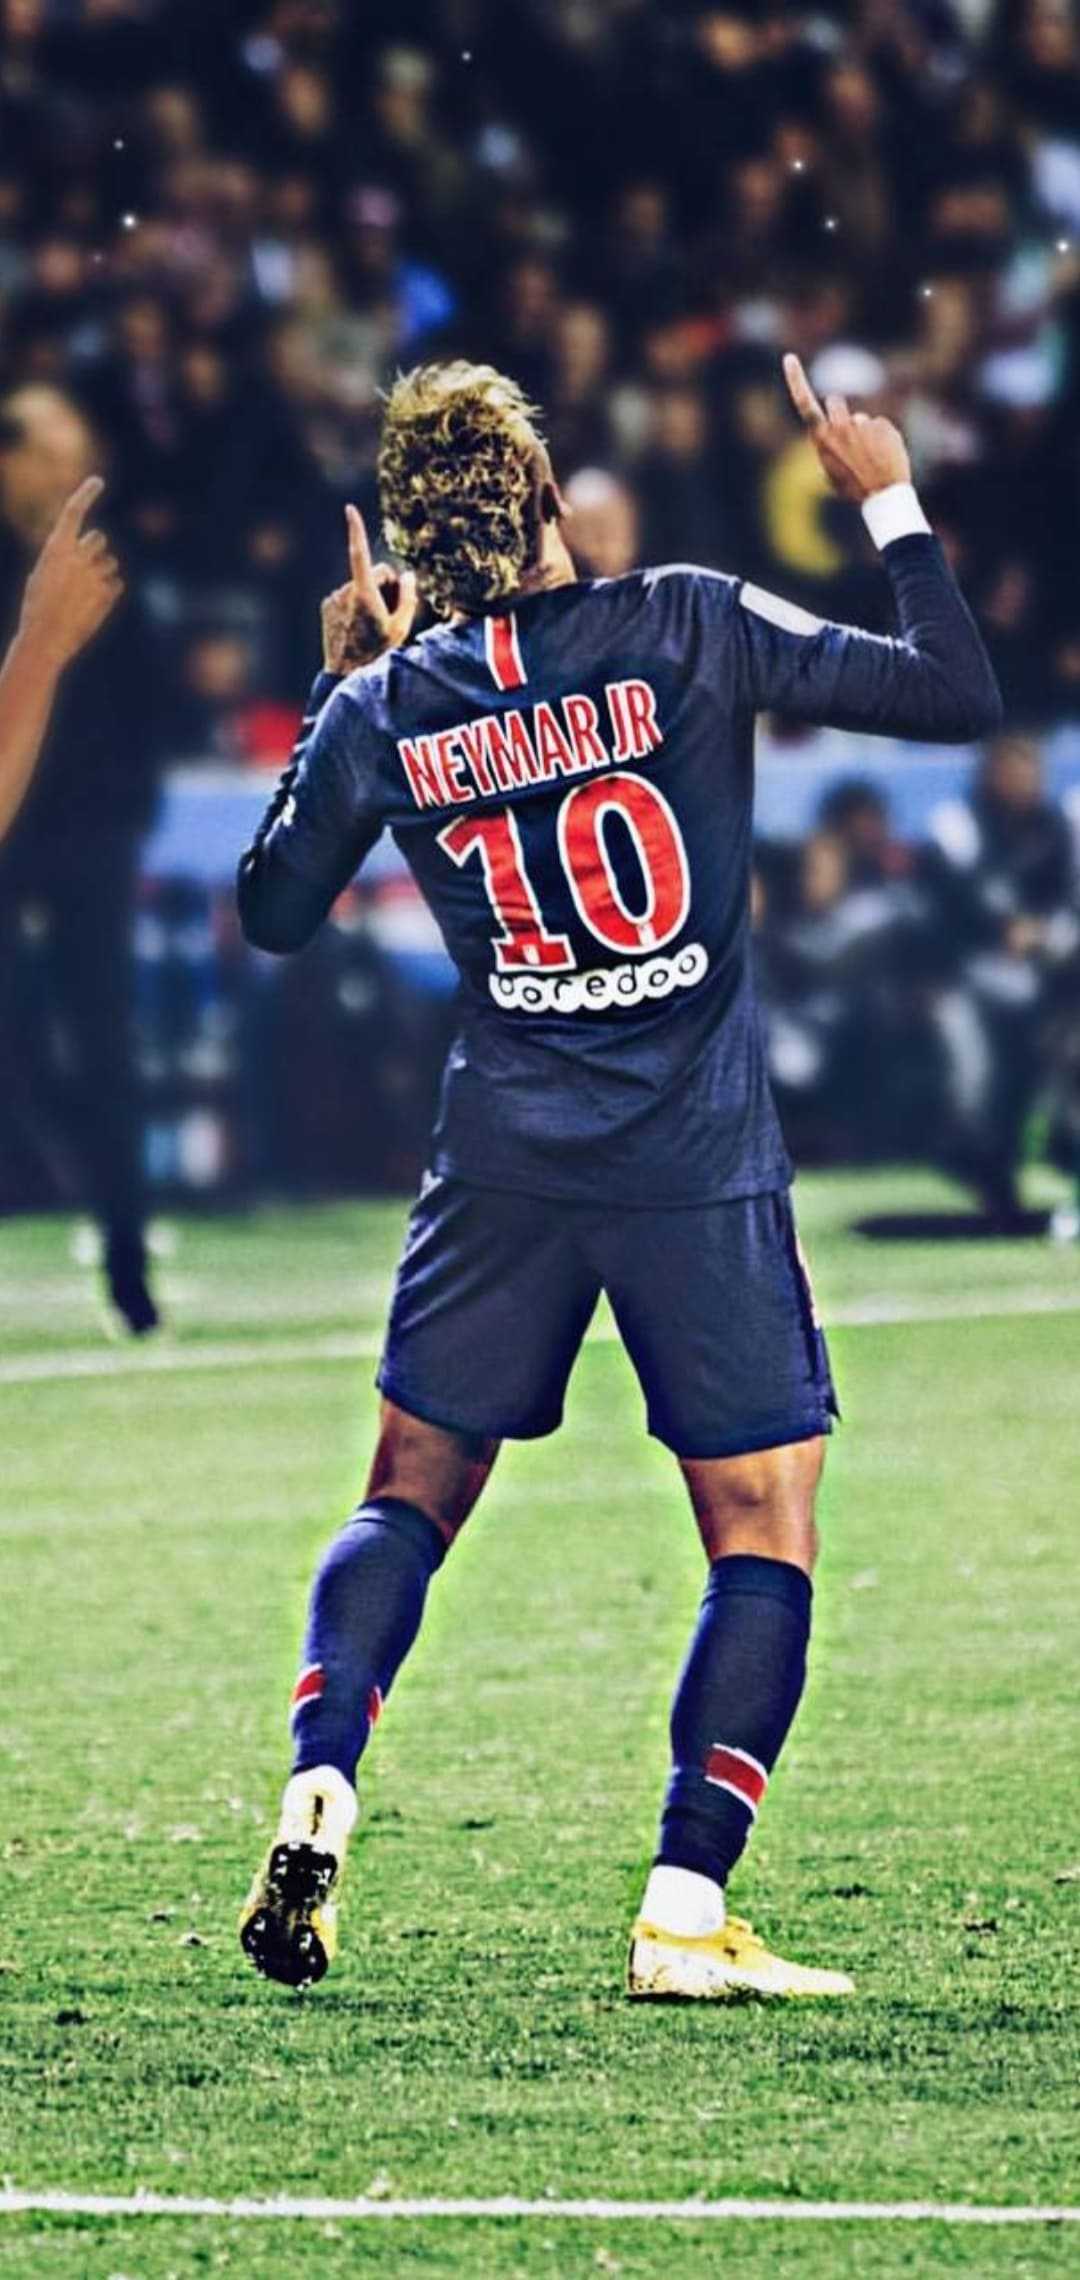 Neymar Wallpaper - NawPic